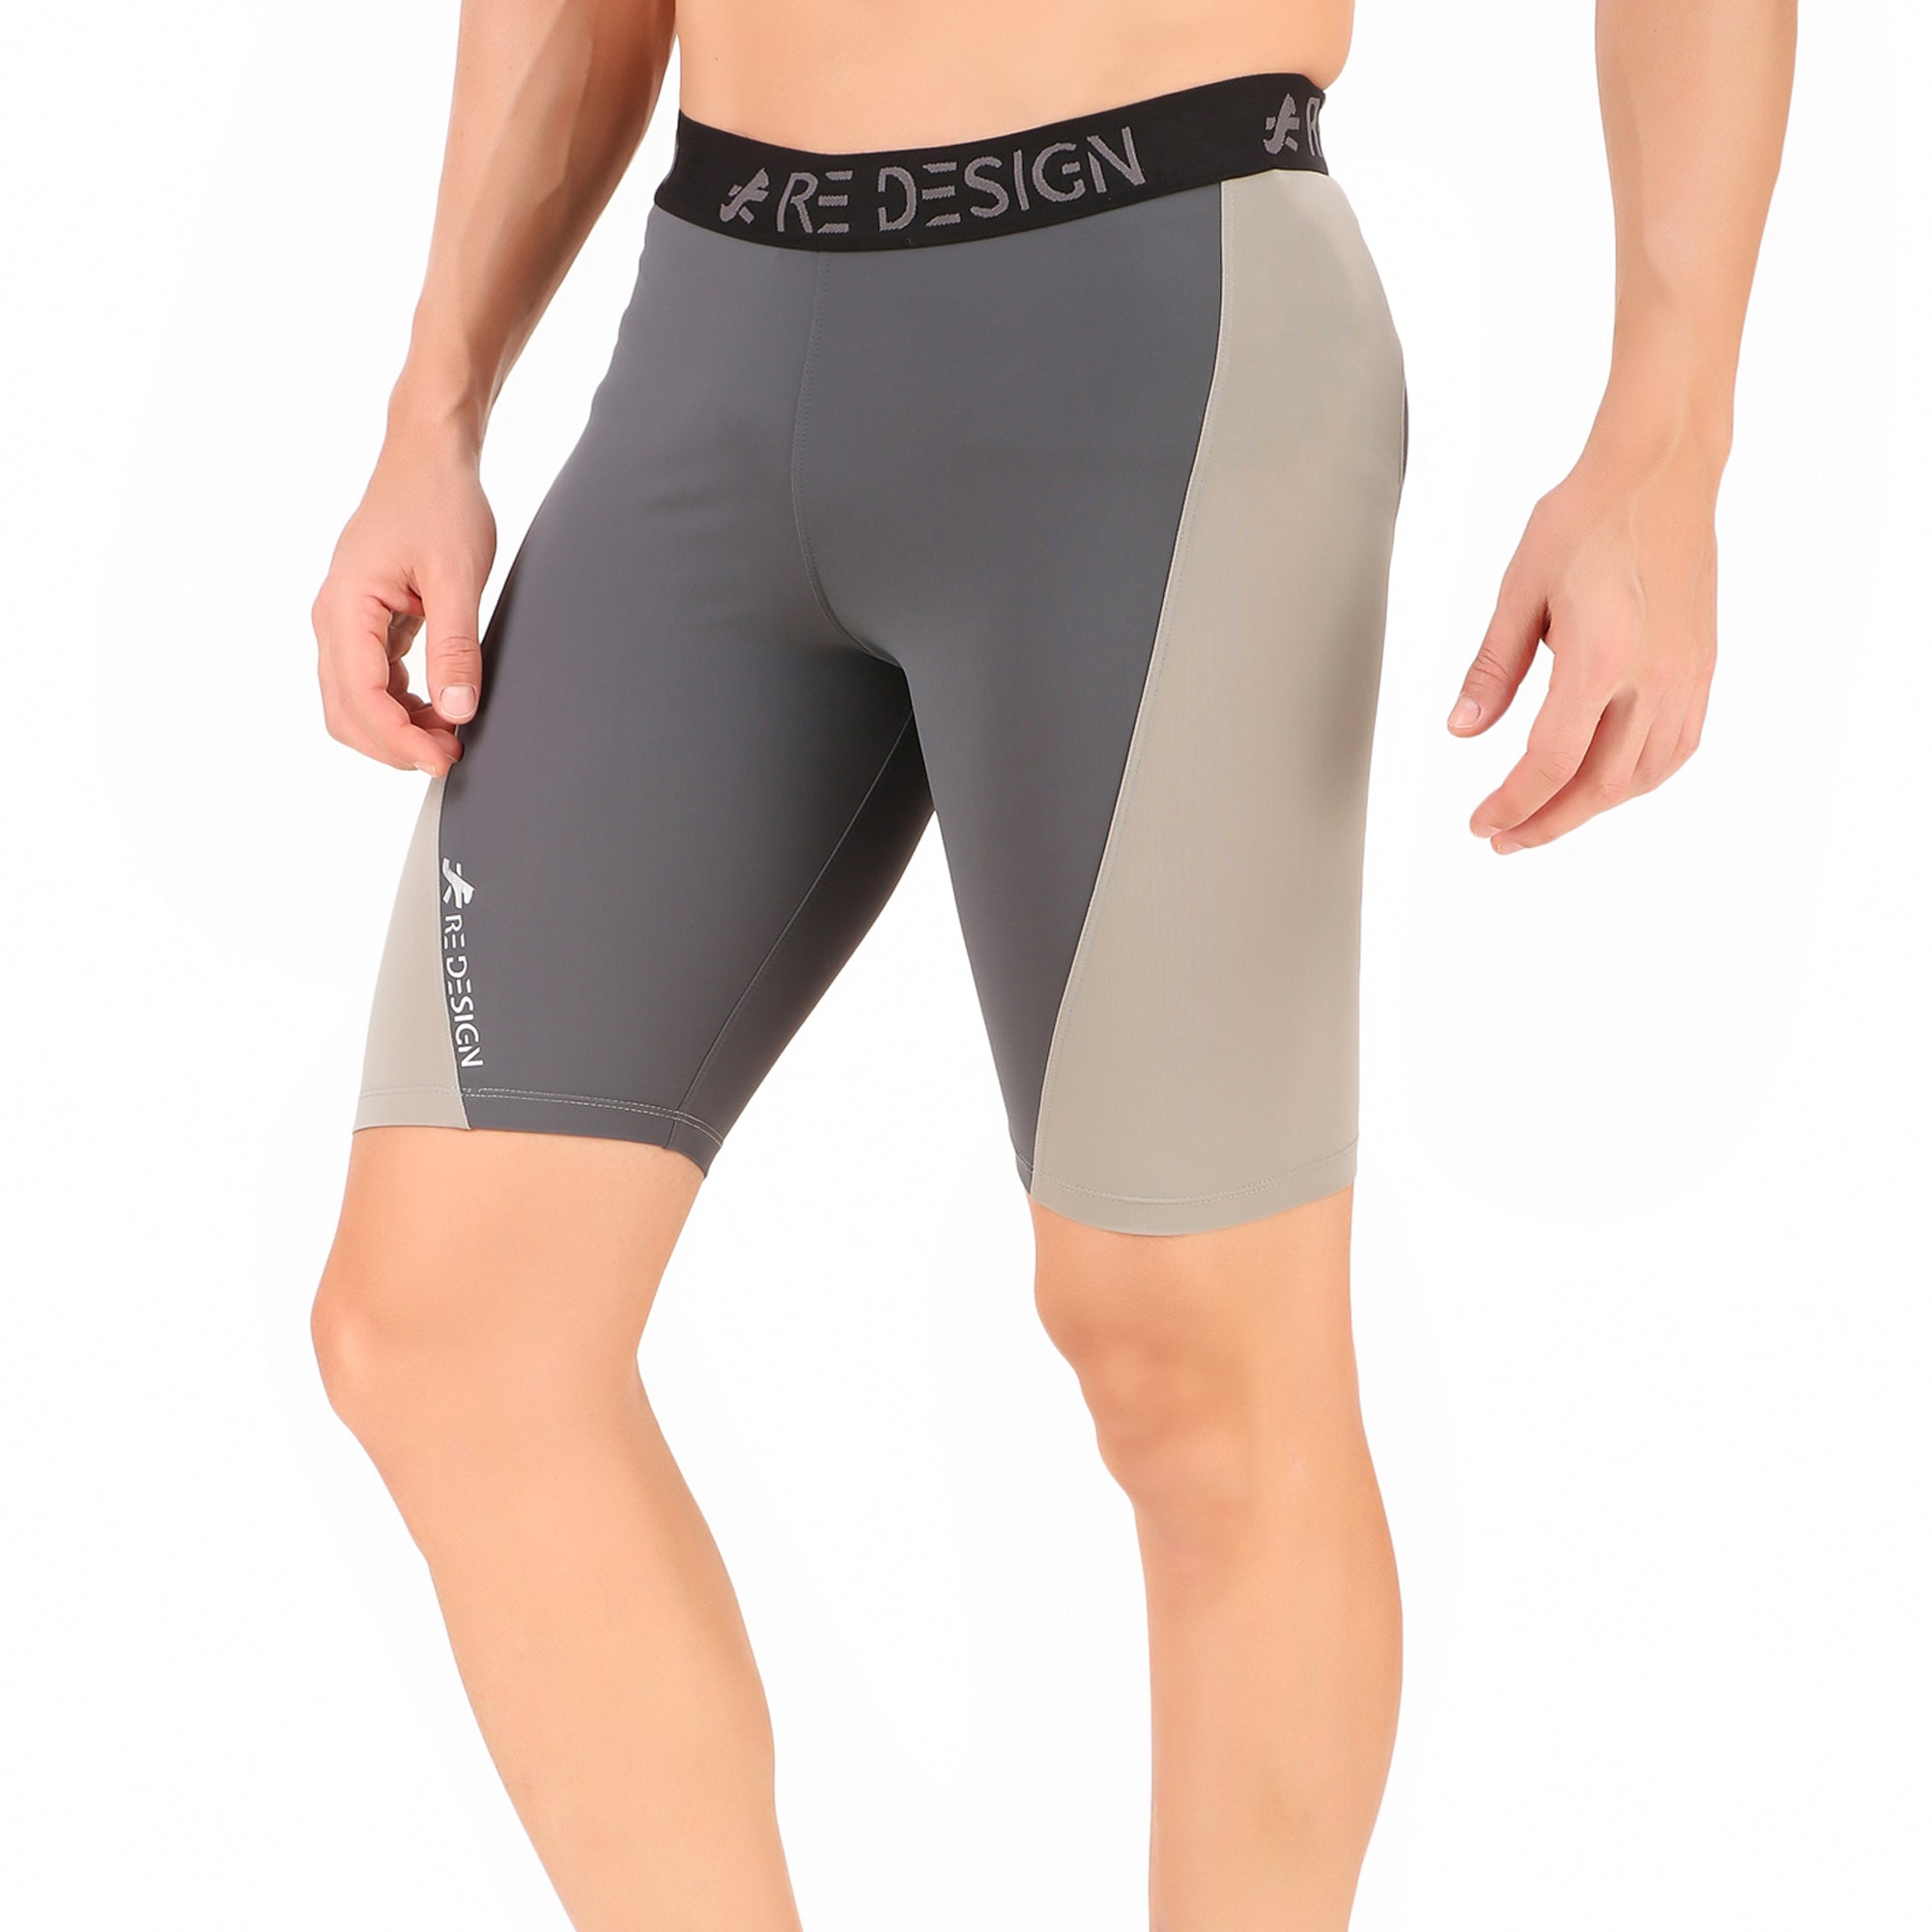 Nylon Compression Shorts and Half Tights For Men (DARK GREY/LIGHT GREY)